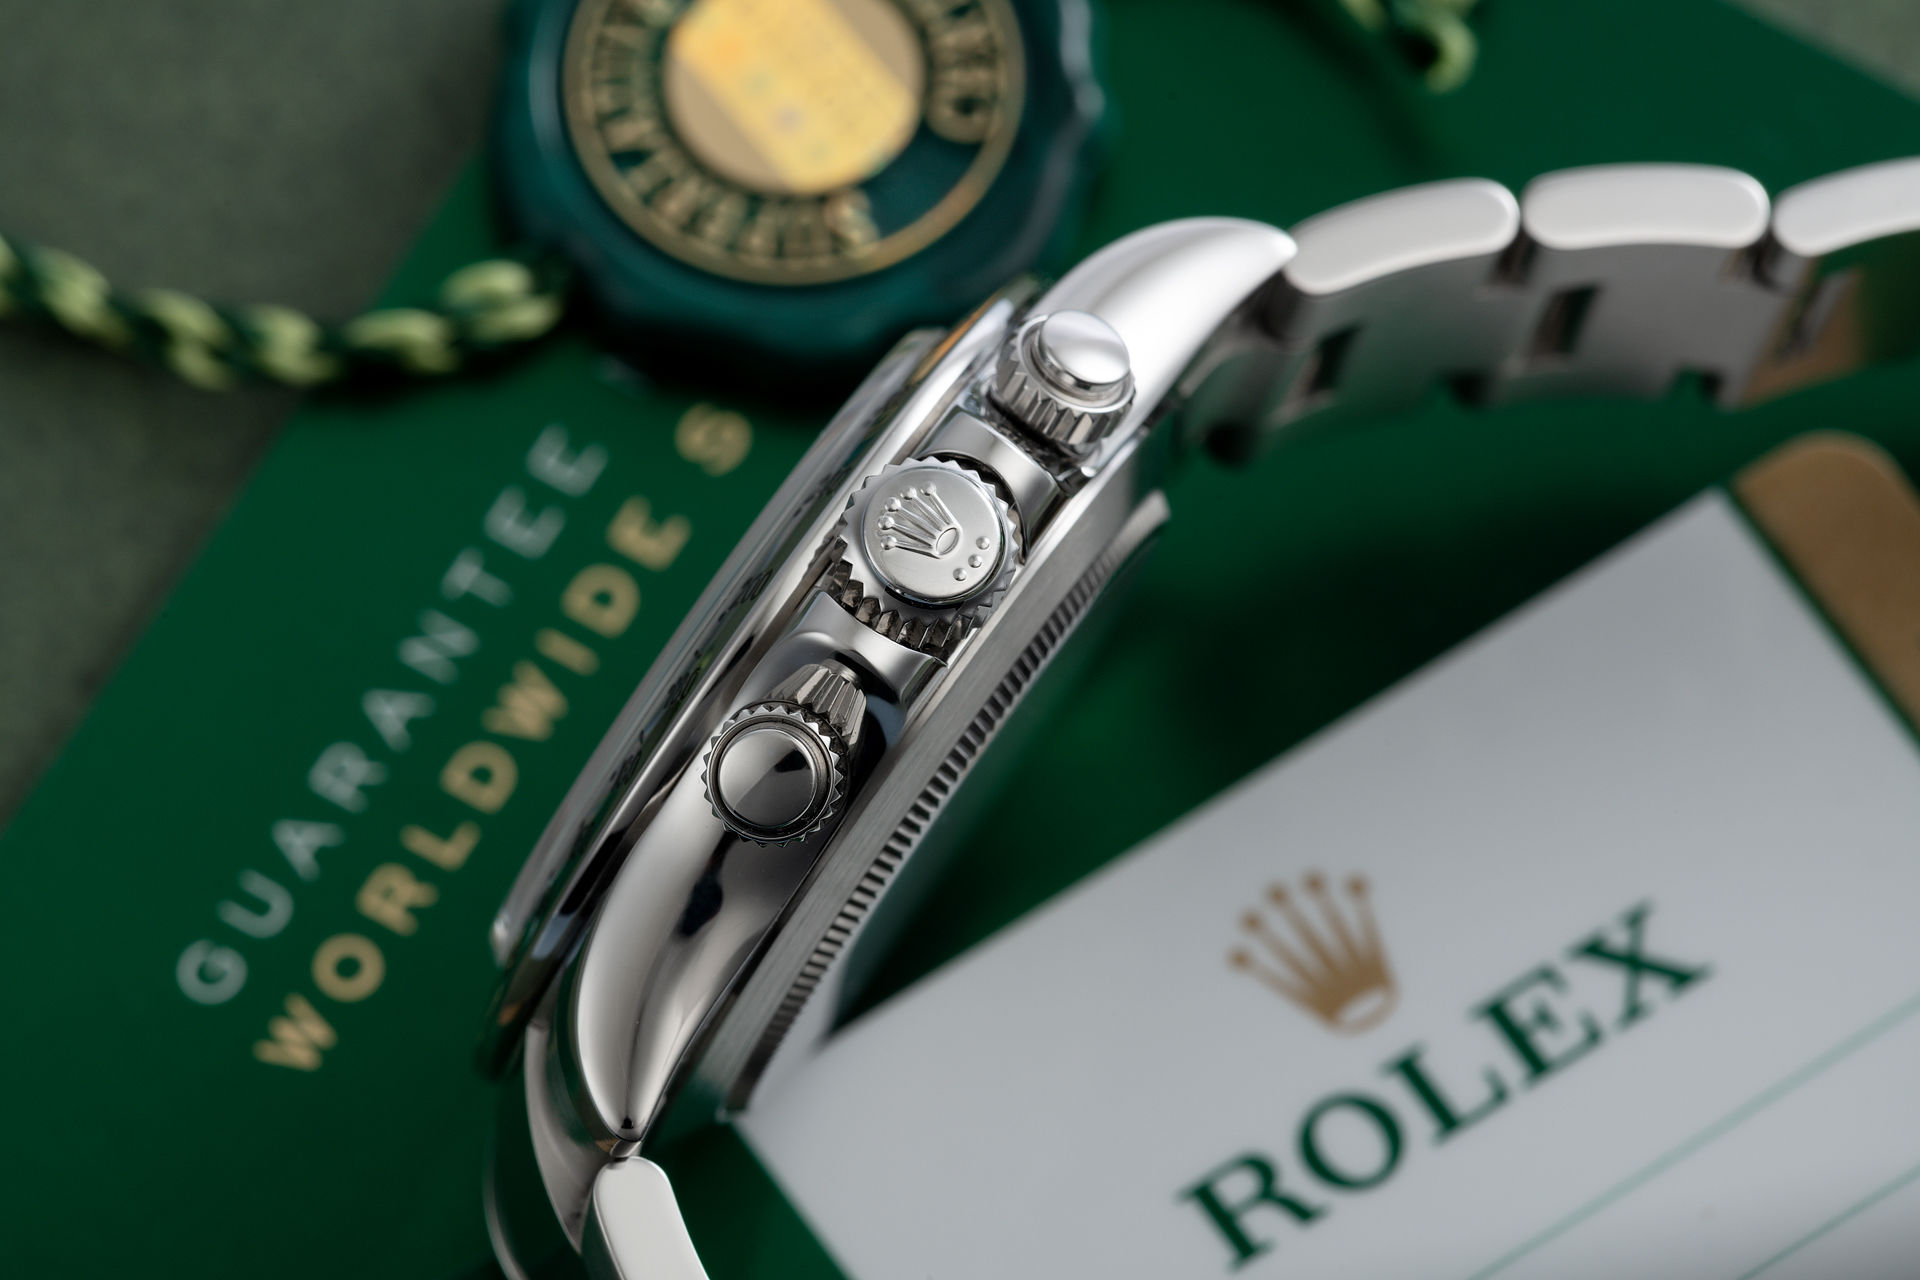 ref 116520 | 'Final Series' Rolex Warranty to 2021 | Rolex Cosmograph Daytona